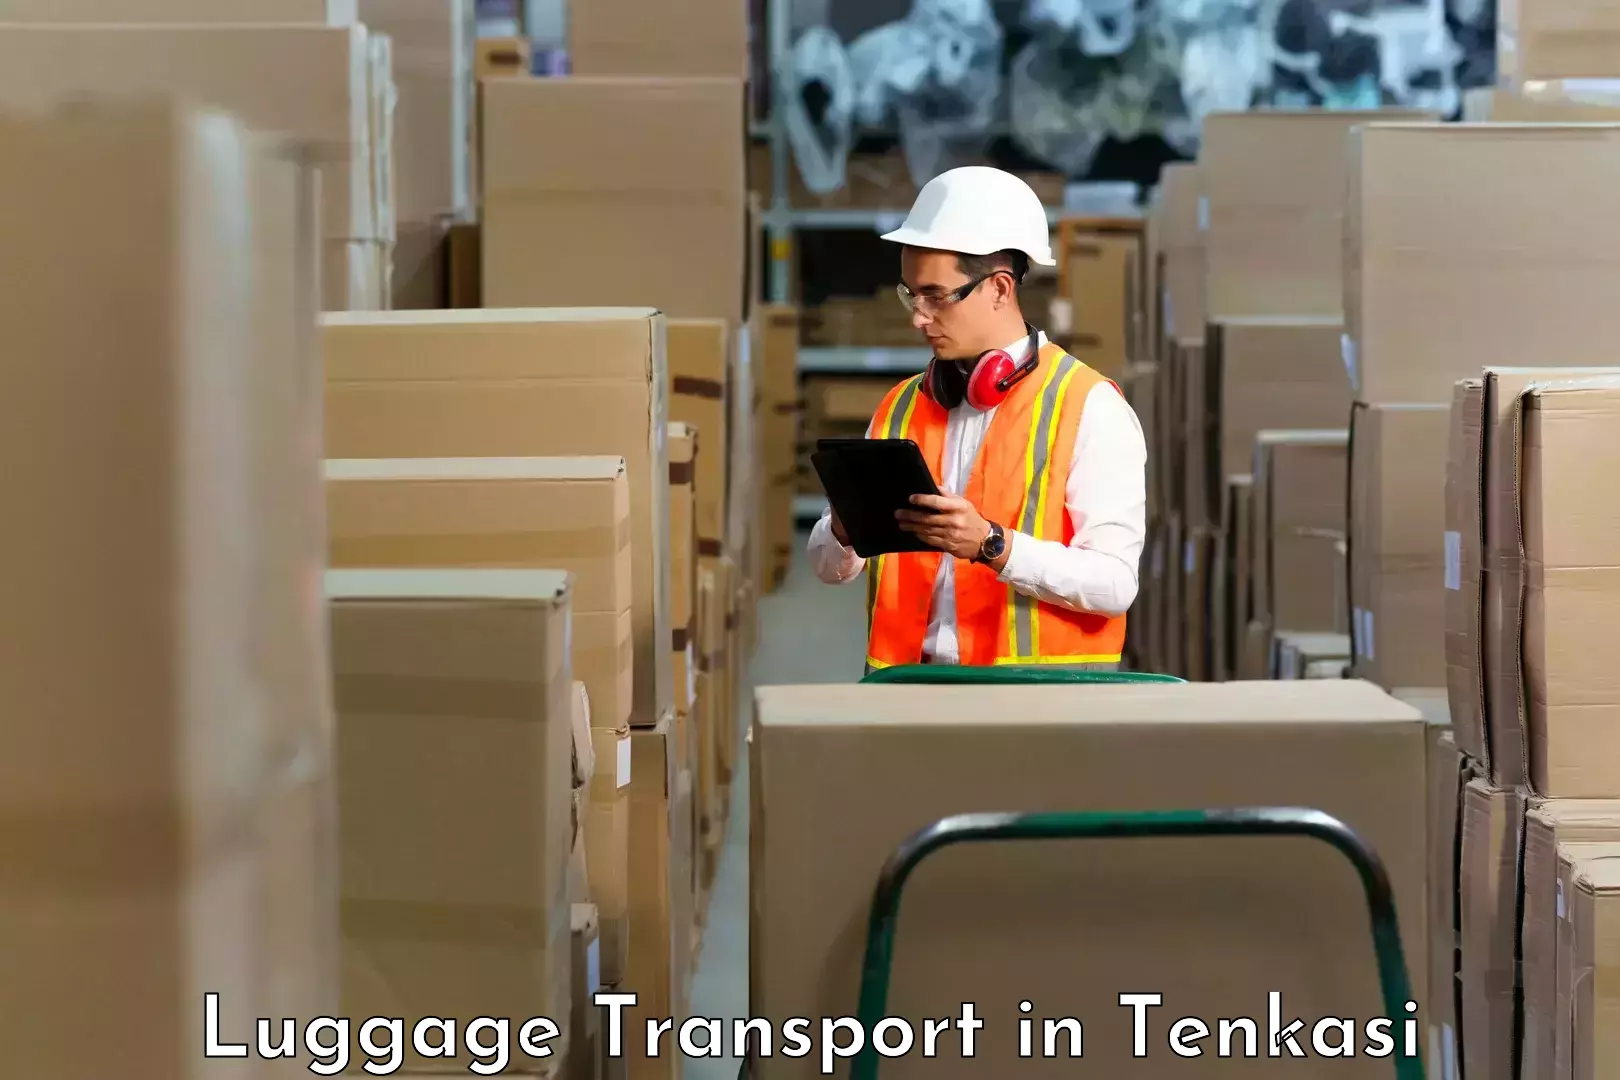 Luggage transport consultancy in Tenkasi